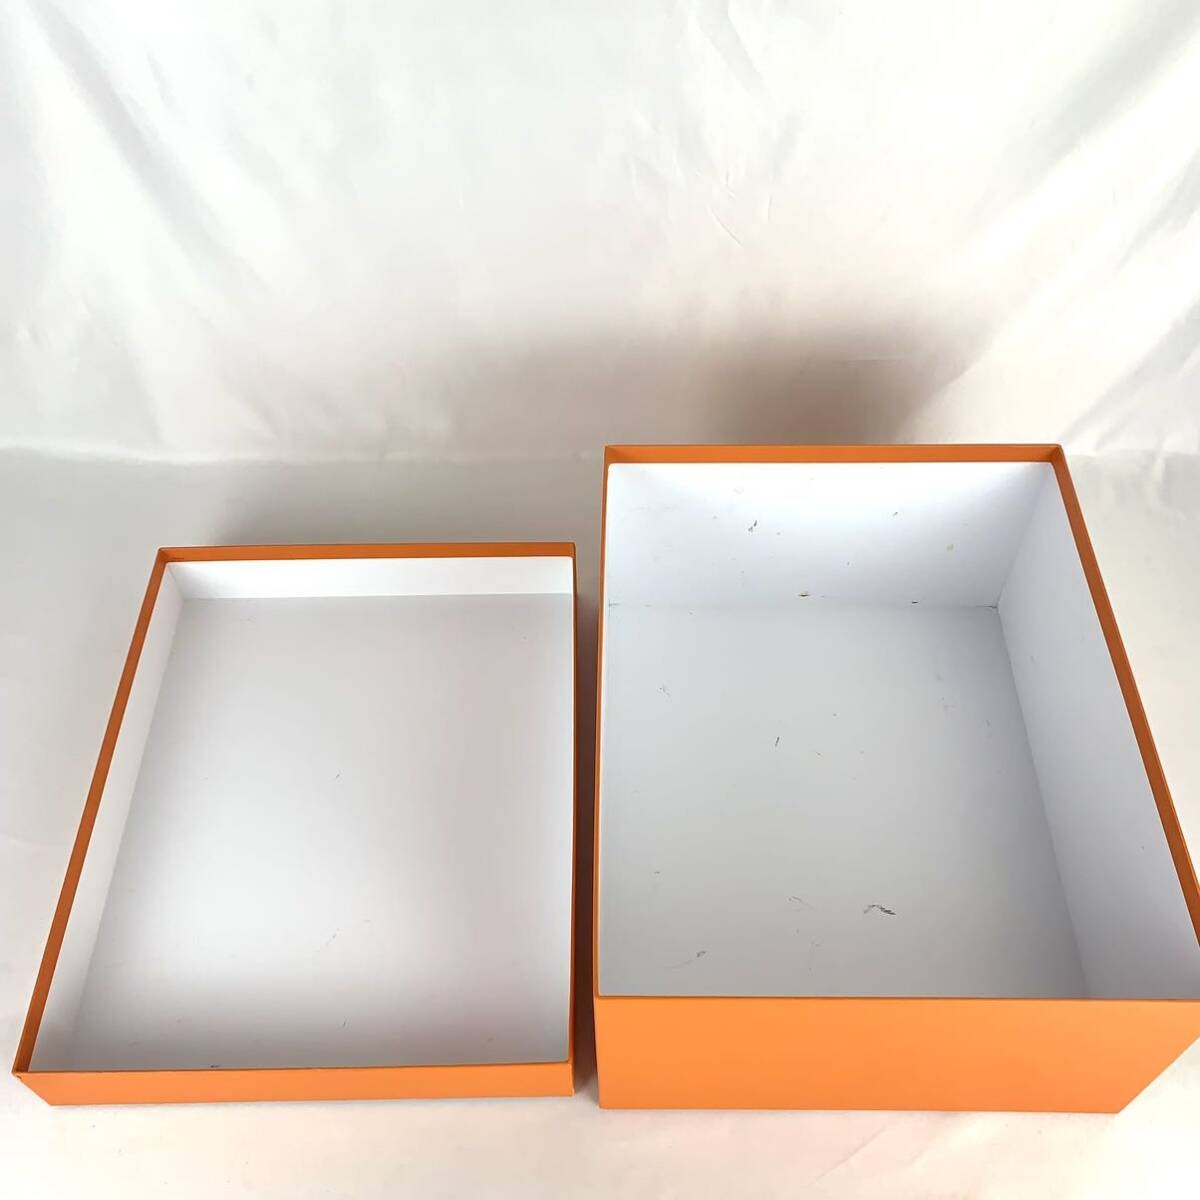 HERMES エルメス 空箱 1313 31×39×18 BOX バーキン30 エルメス ボックス 空き箱 オレンジ 化粧箱 バーキン 保存箱の画像5